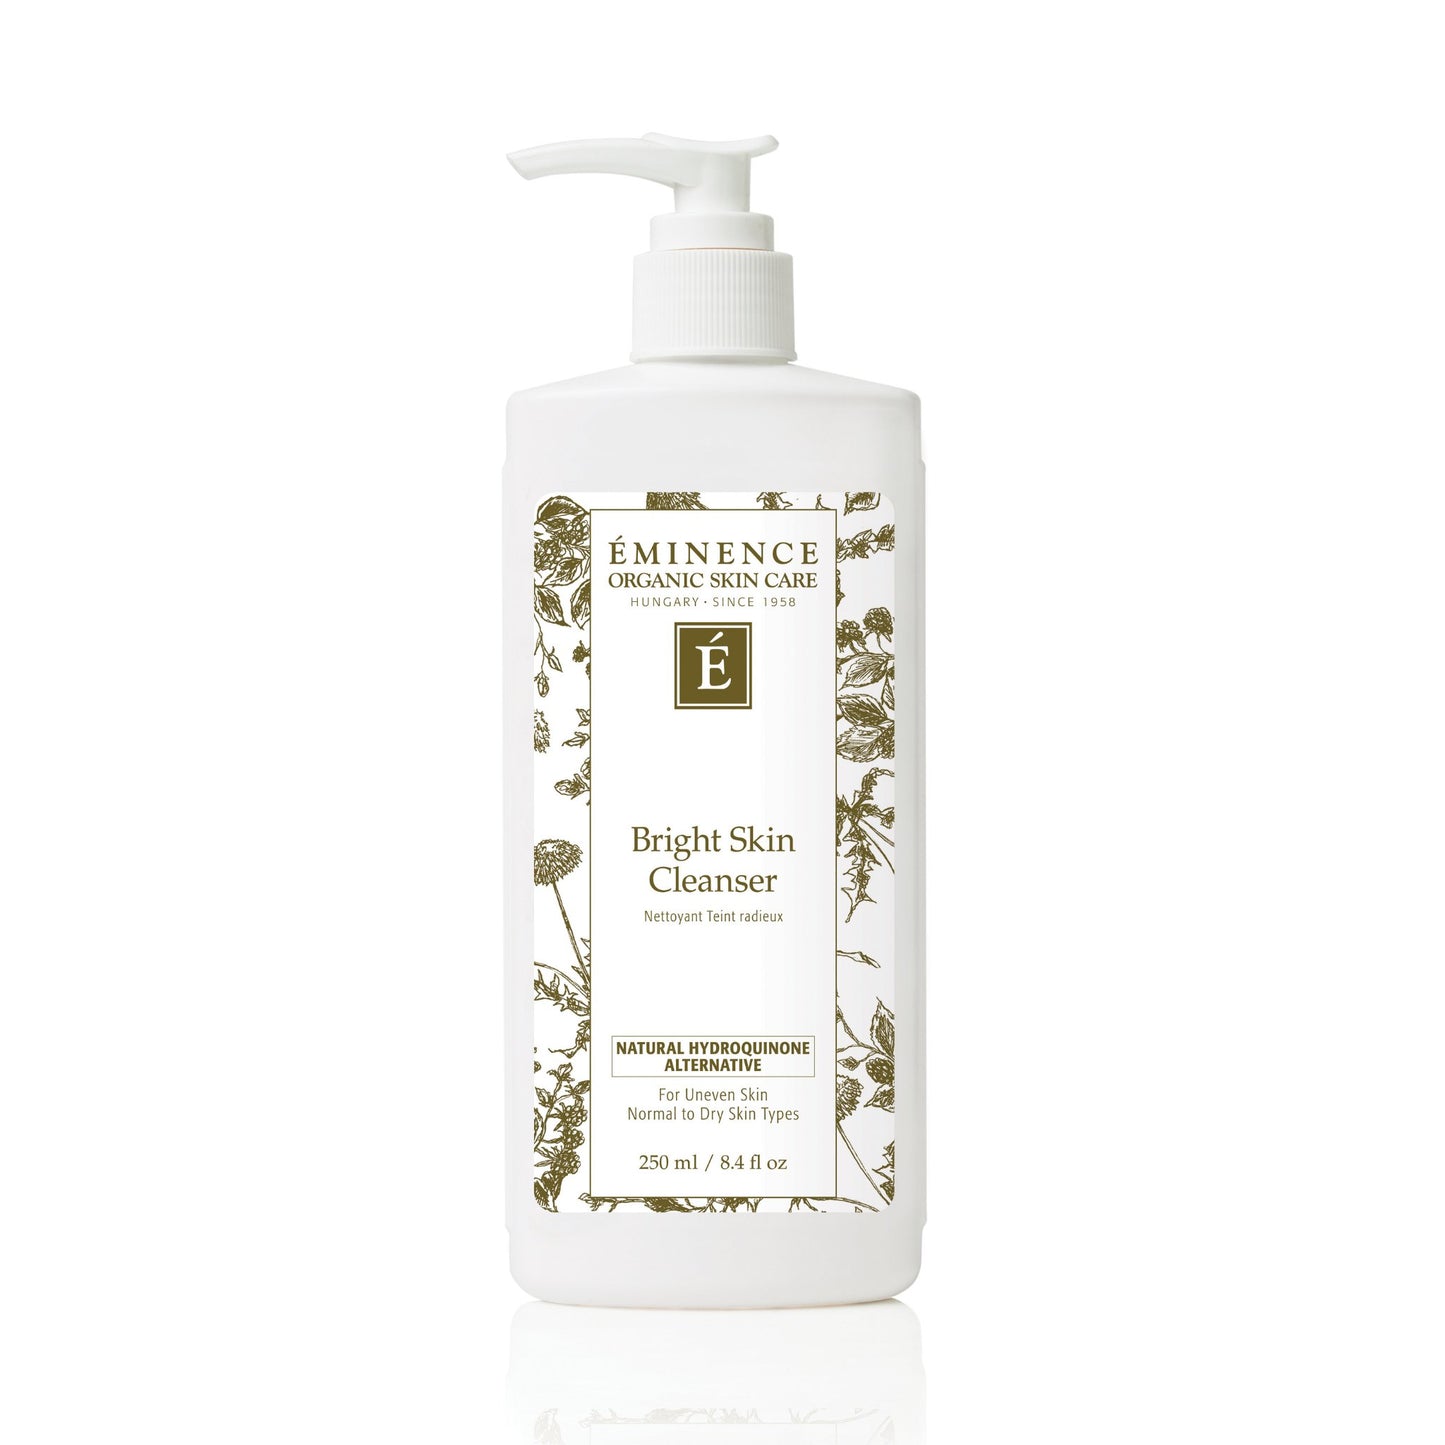 Eminence Organics - Eminence Bright Skin Cleanser - ORESTA clean beauty simplified